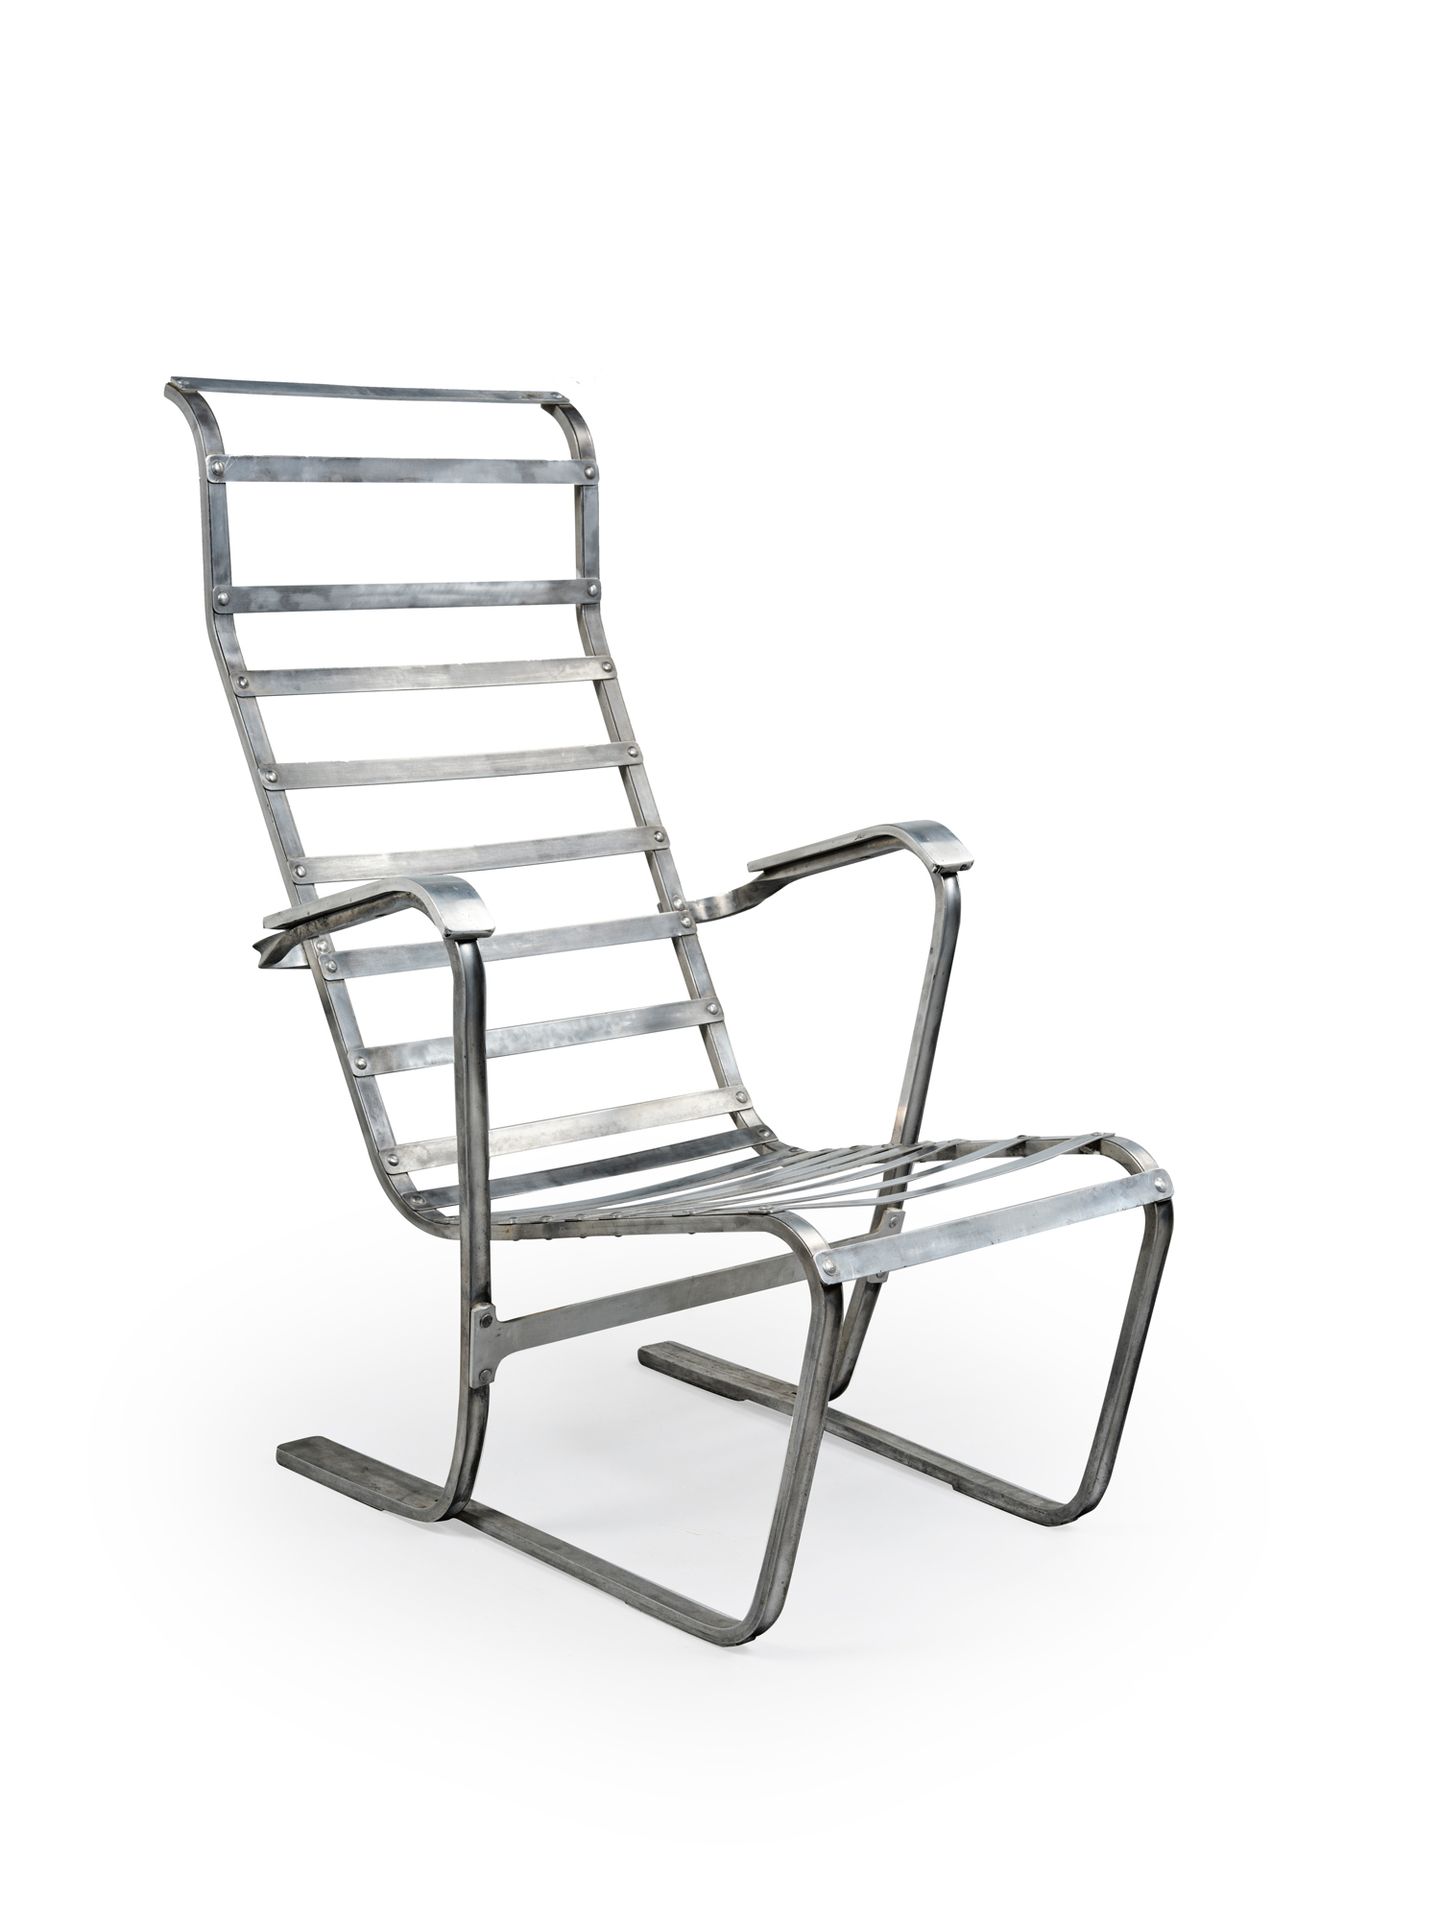 Marcel BREUER (1902-1981) 罕见的现代主义贵妃椅，配有弧形钢架和铆接板条座椅和靠背。
带有出版商的小册子 "Meubles Stylcl&hellip;